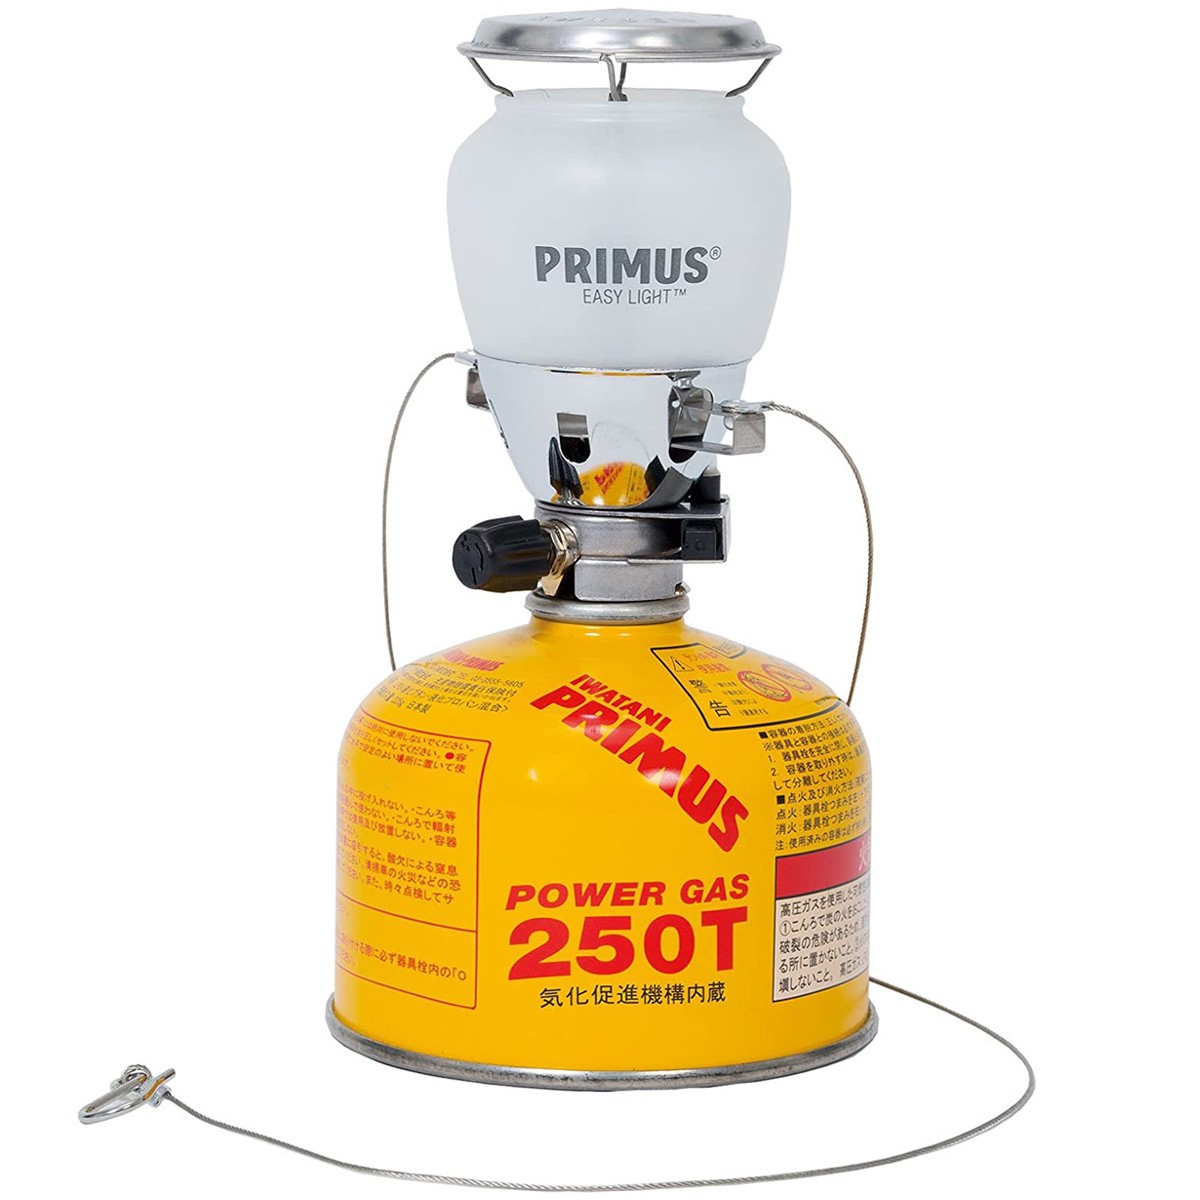 PRIMUS プリムス 2245ランタン 点火装置付 IP-2245A-S Easy Light イージーライト